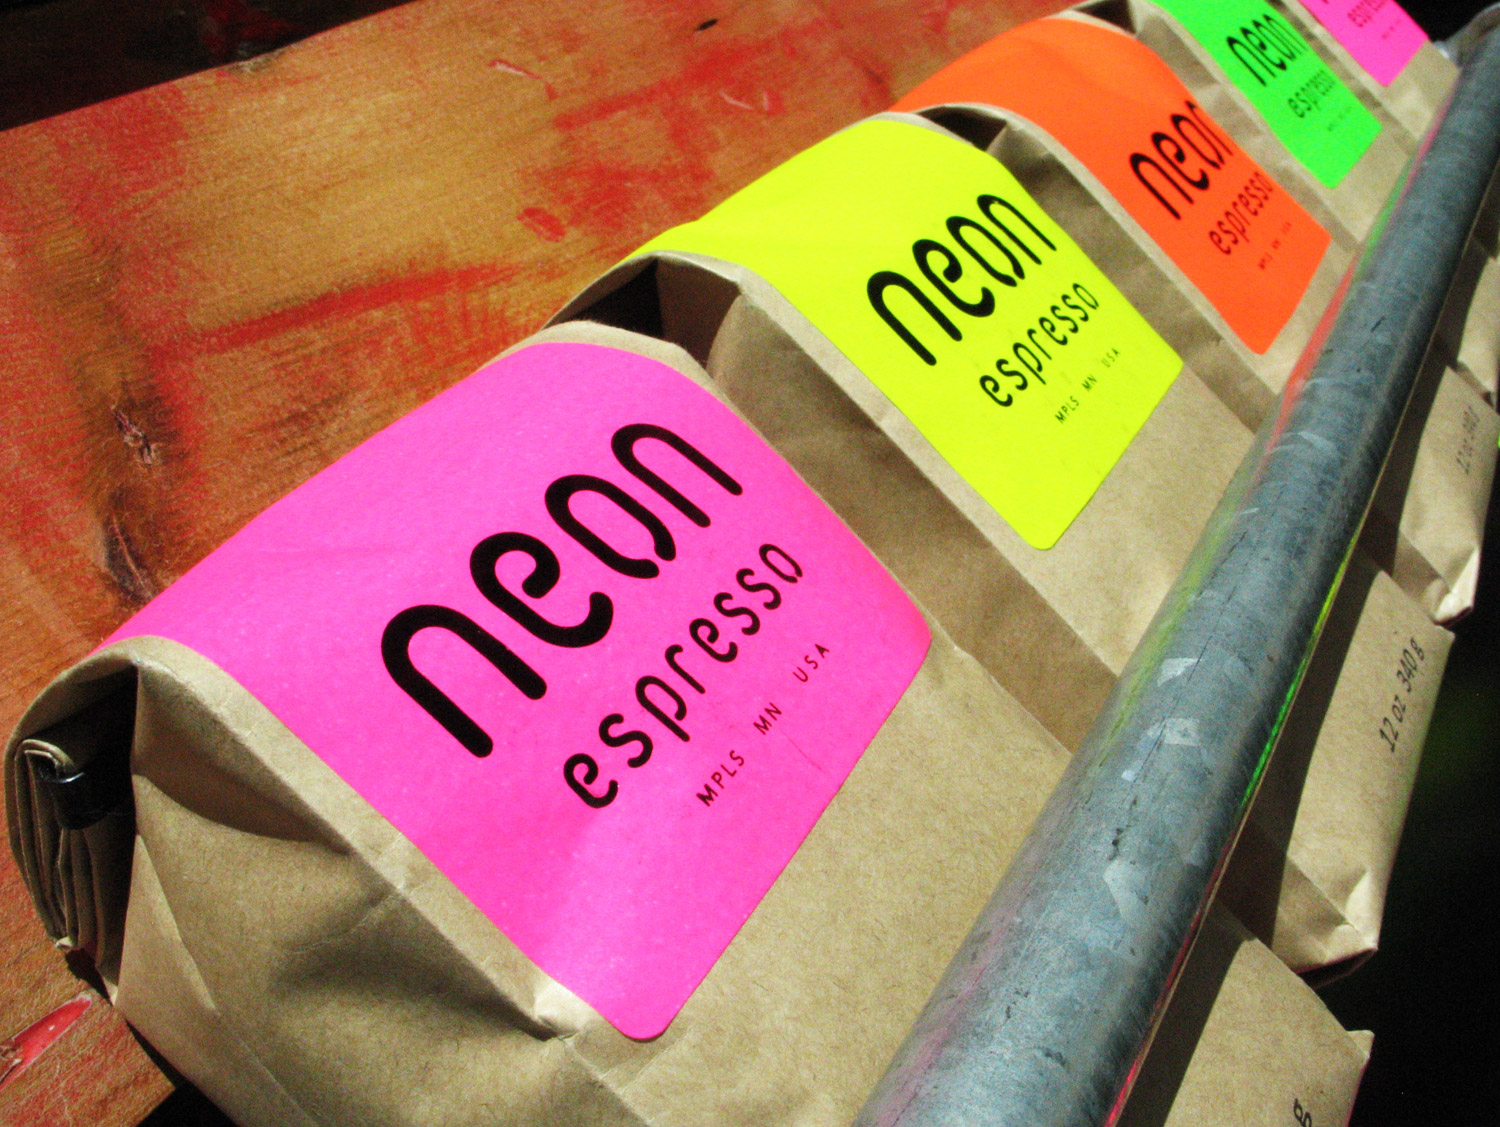 Dogwood-Coffee-Neon-Espresso-Packaging-03.jpg